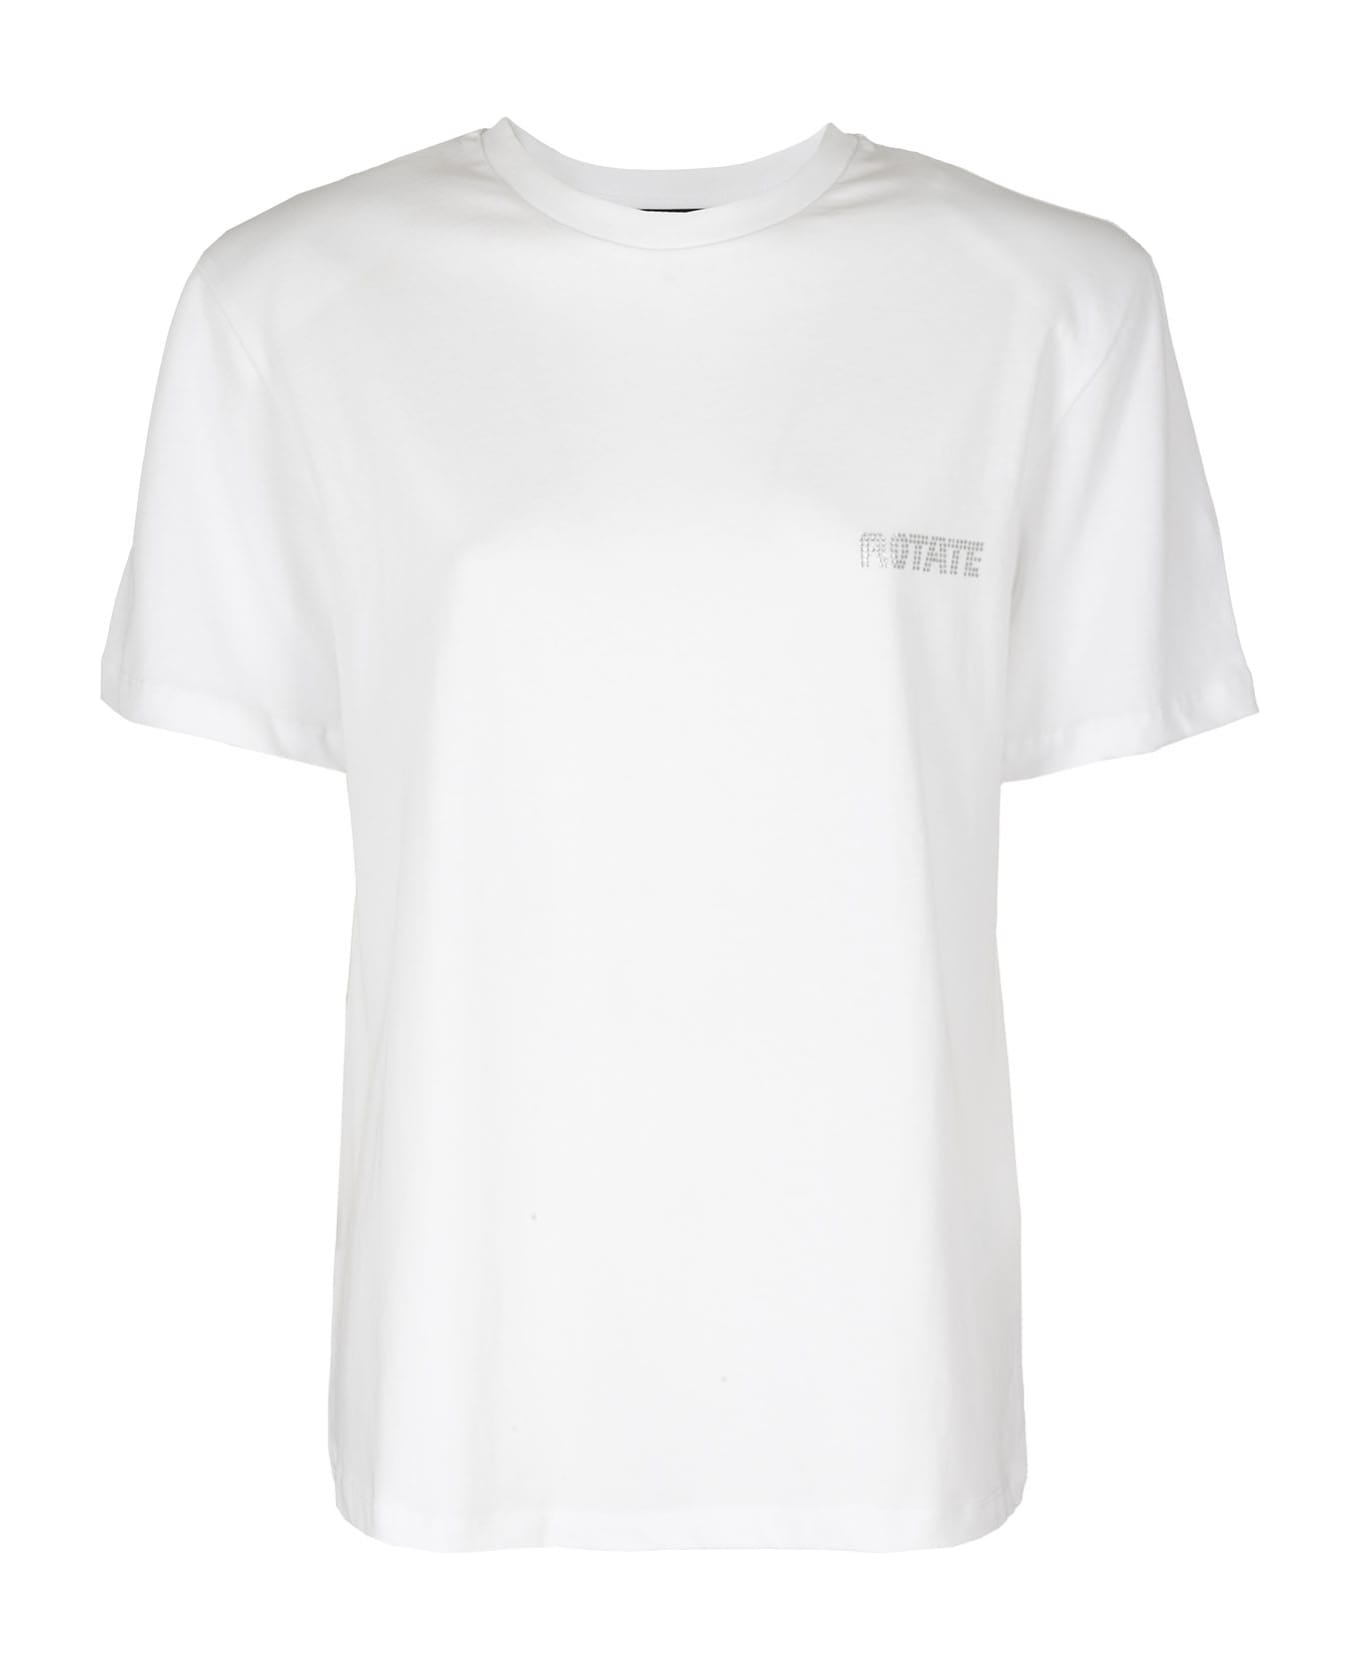 Rotate by Birger Christensen Boxy Lasercut T Shirt - Bright White